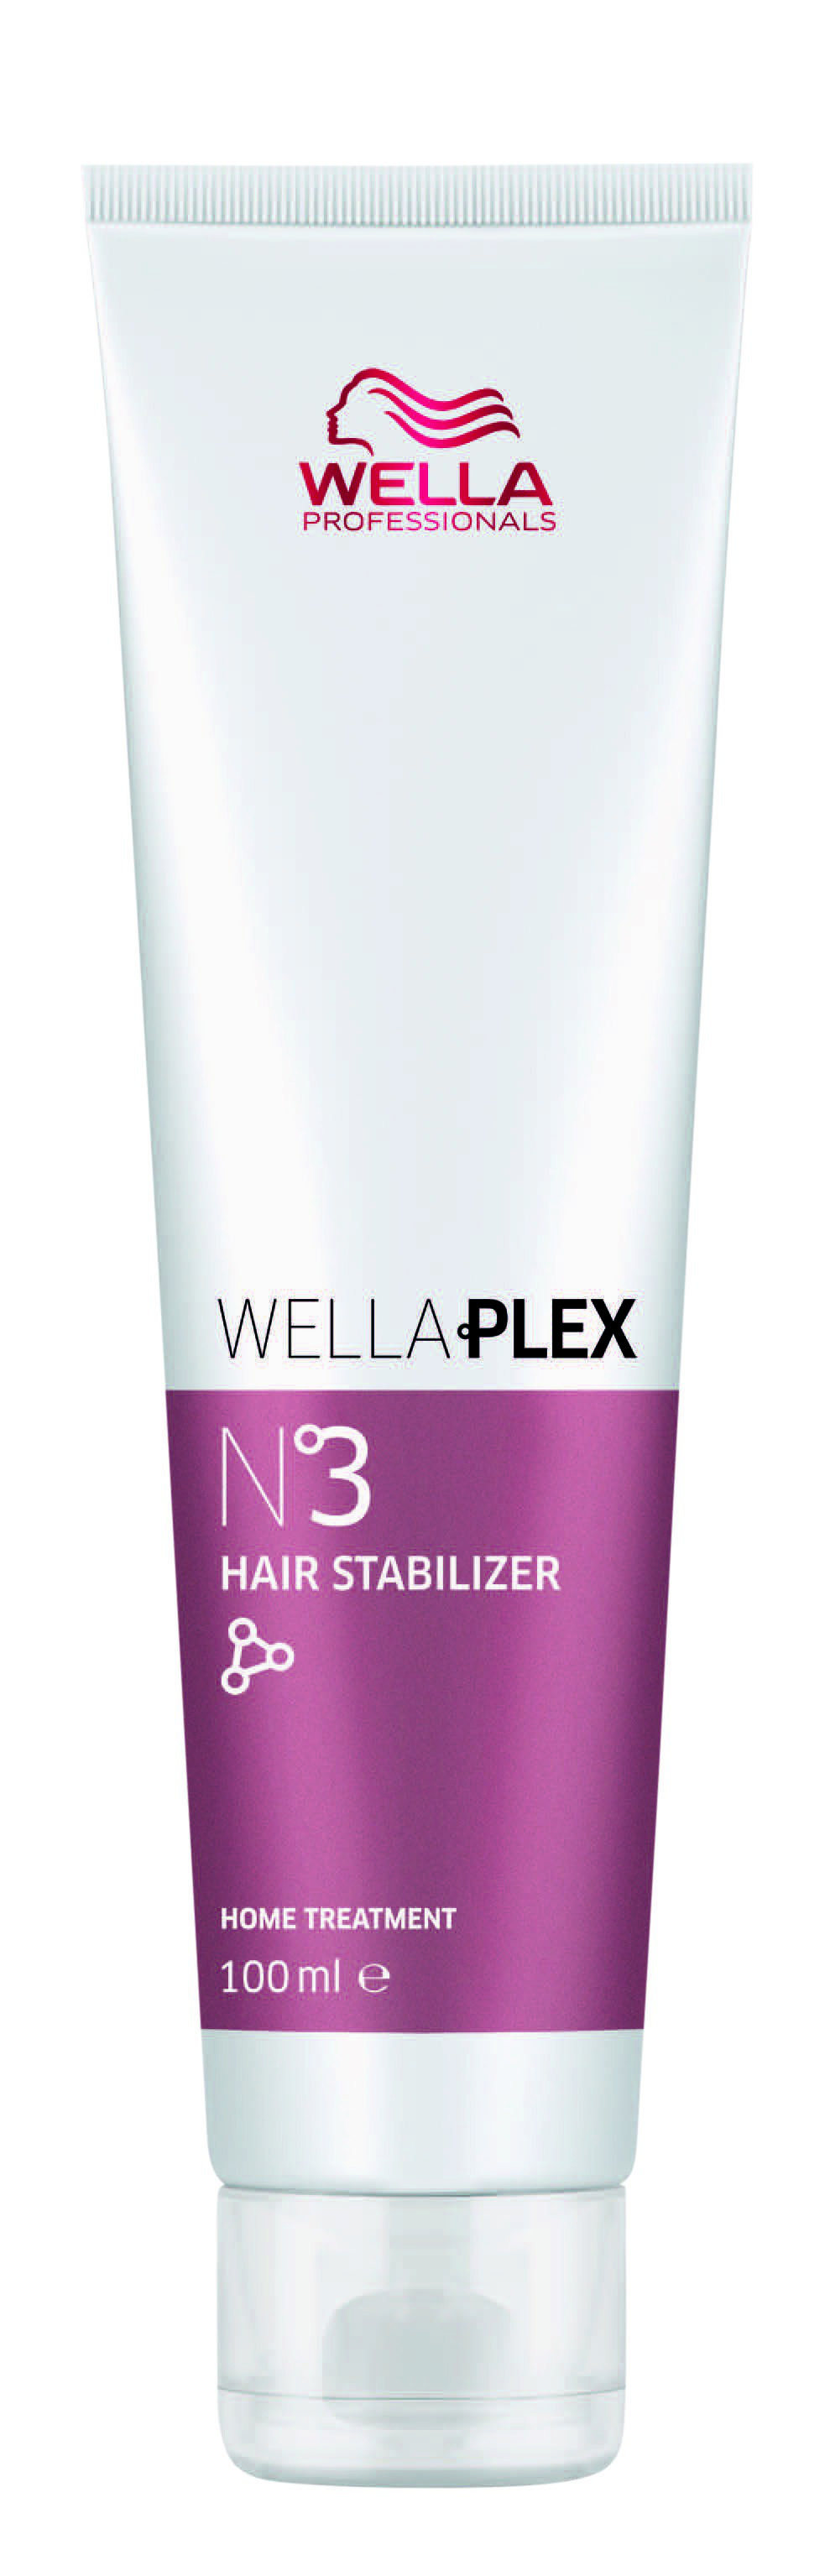 Wella PLEX NO 3 Hair Stabilizer 3.38oz